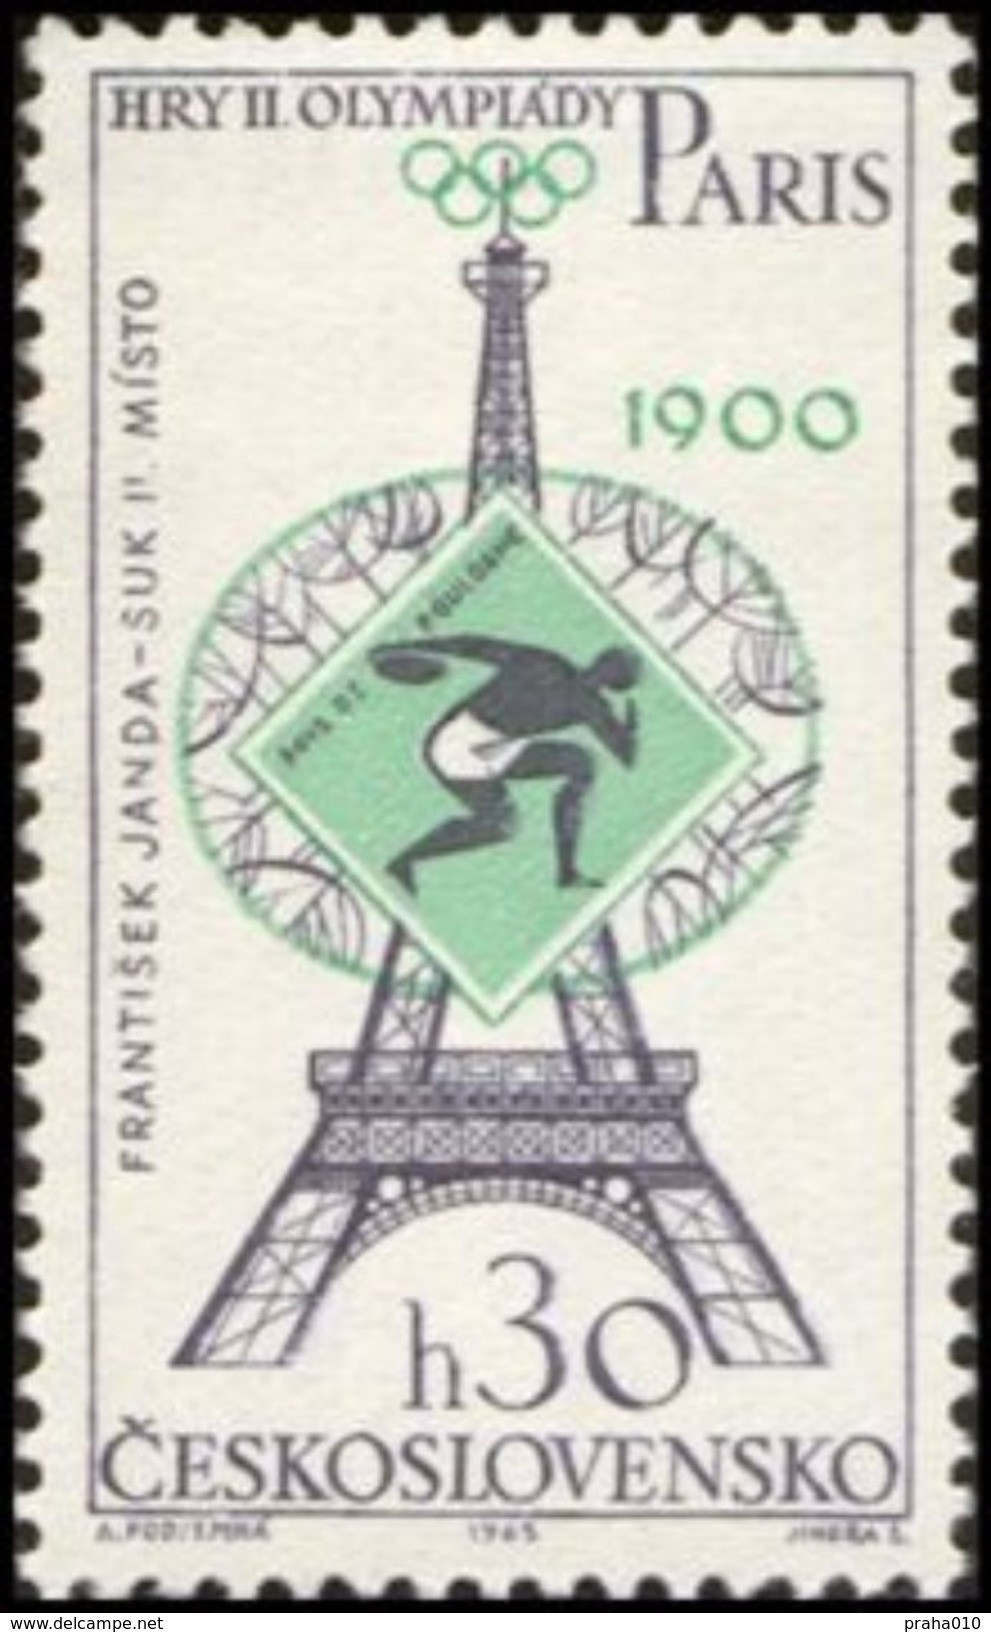 Czechoslovakia / Stamps (1965) 1429: Olympic Games 1900 Paris, F. Janda-Suk (discus Throw); Painter: Anna Podzemna - Zomer 1900: Parijs